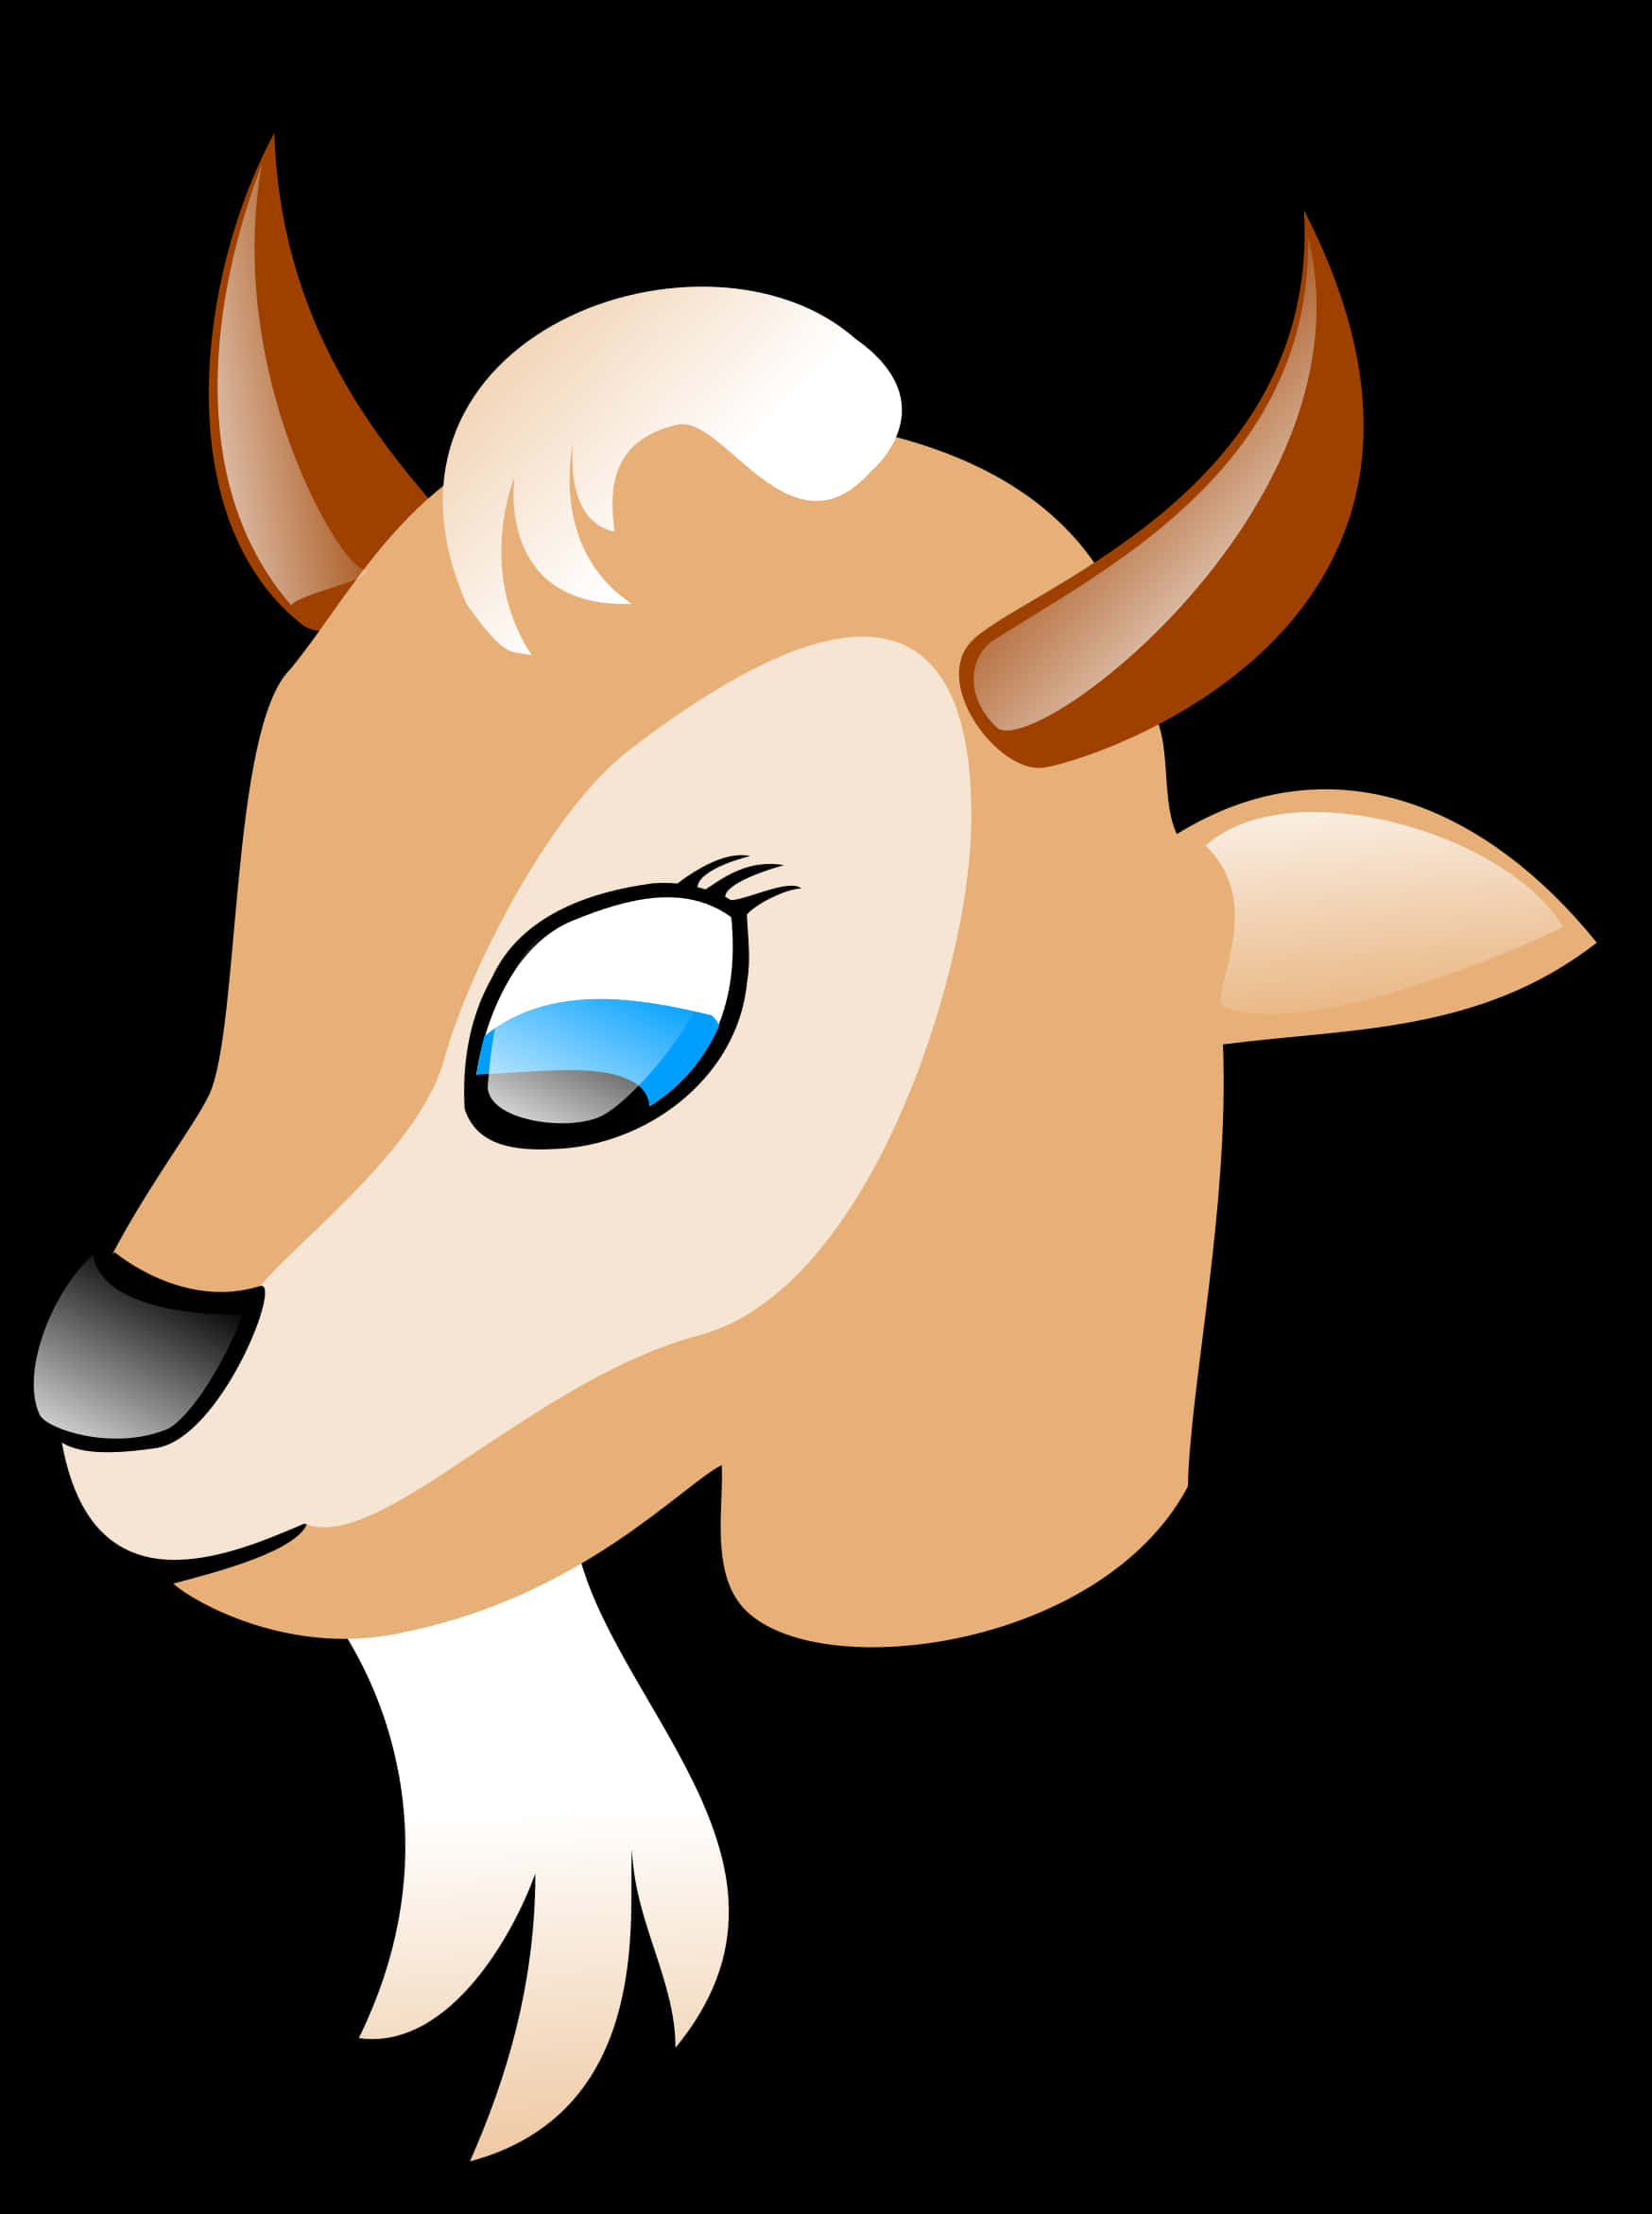 Cartoon Goat Head Graphic PNG